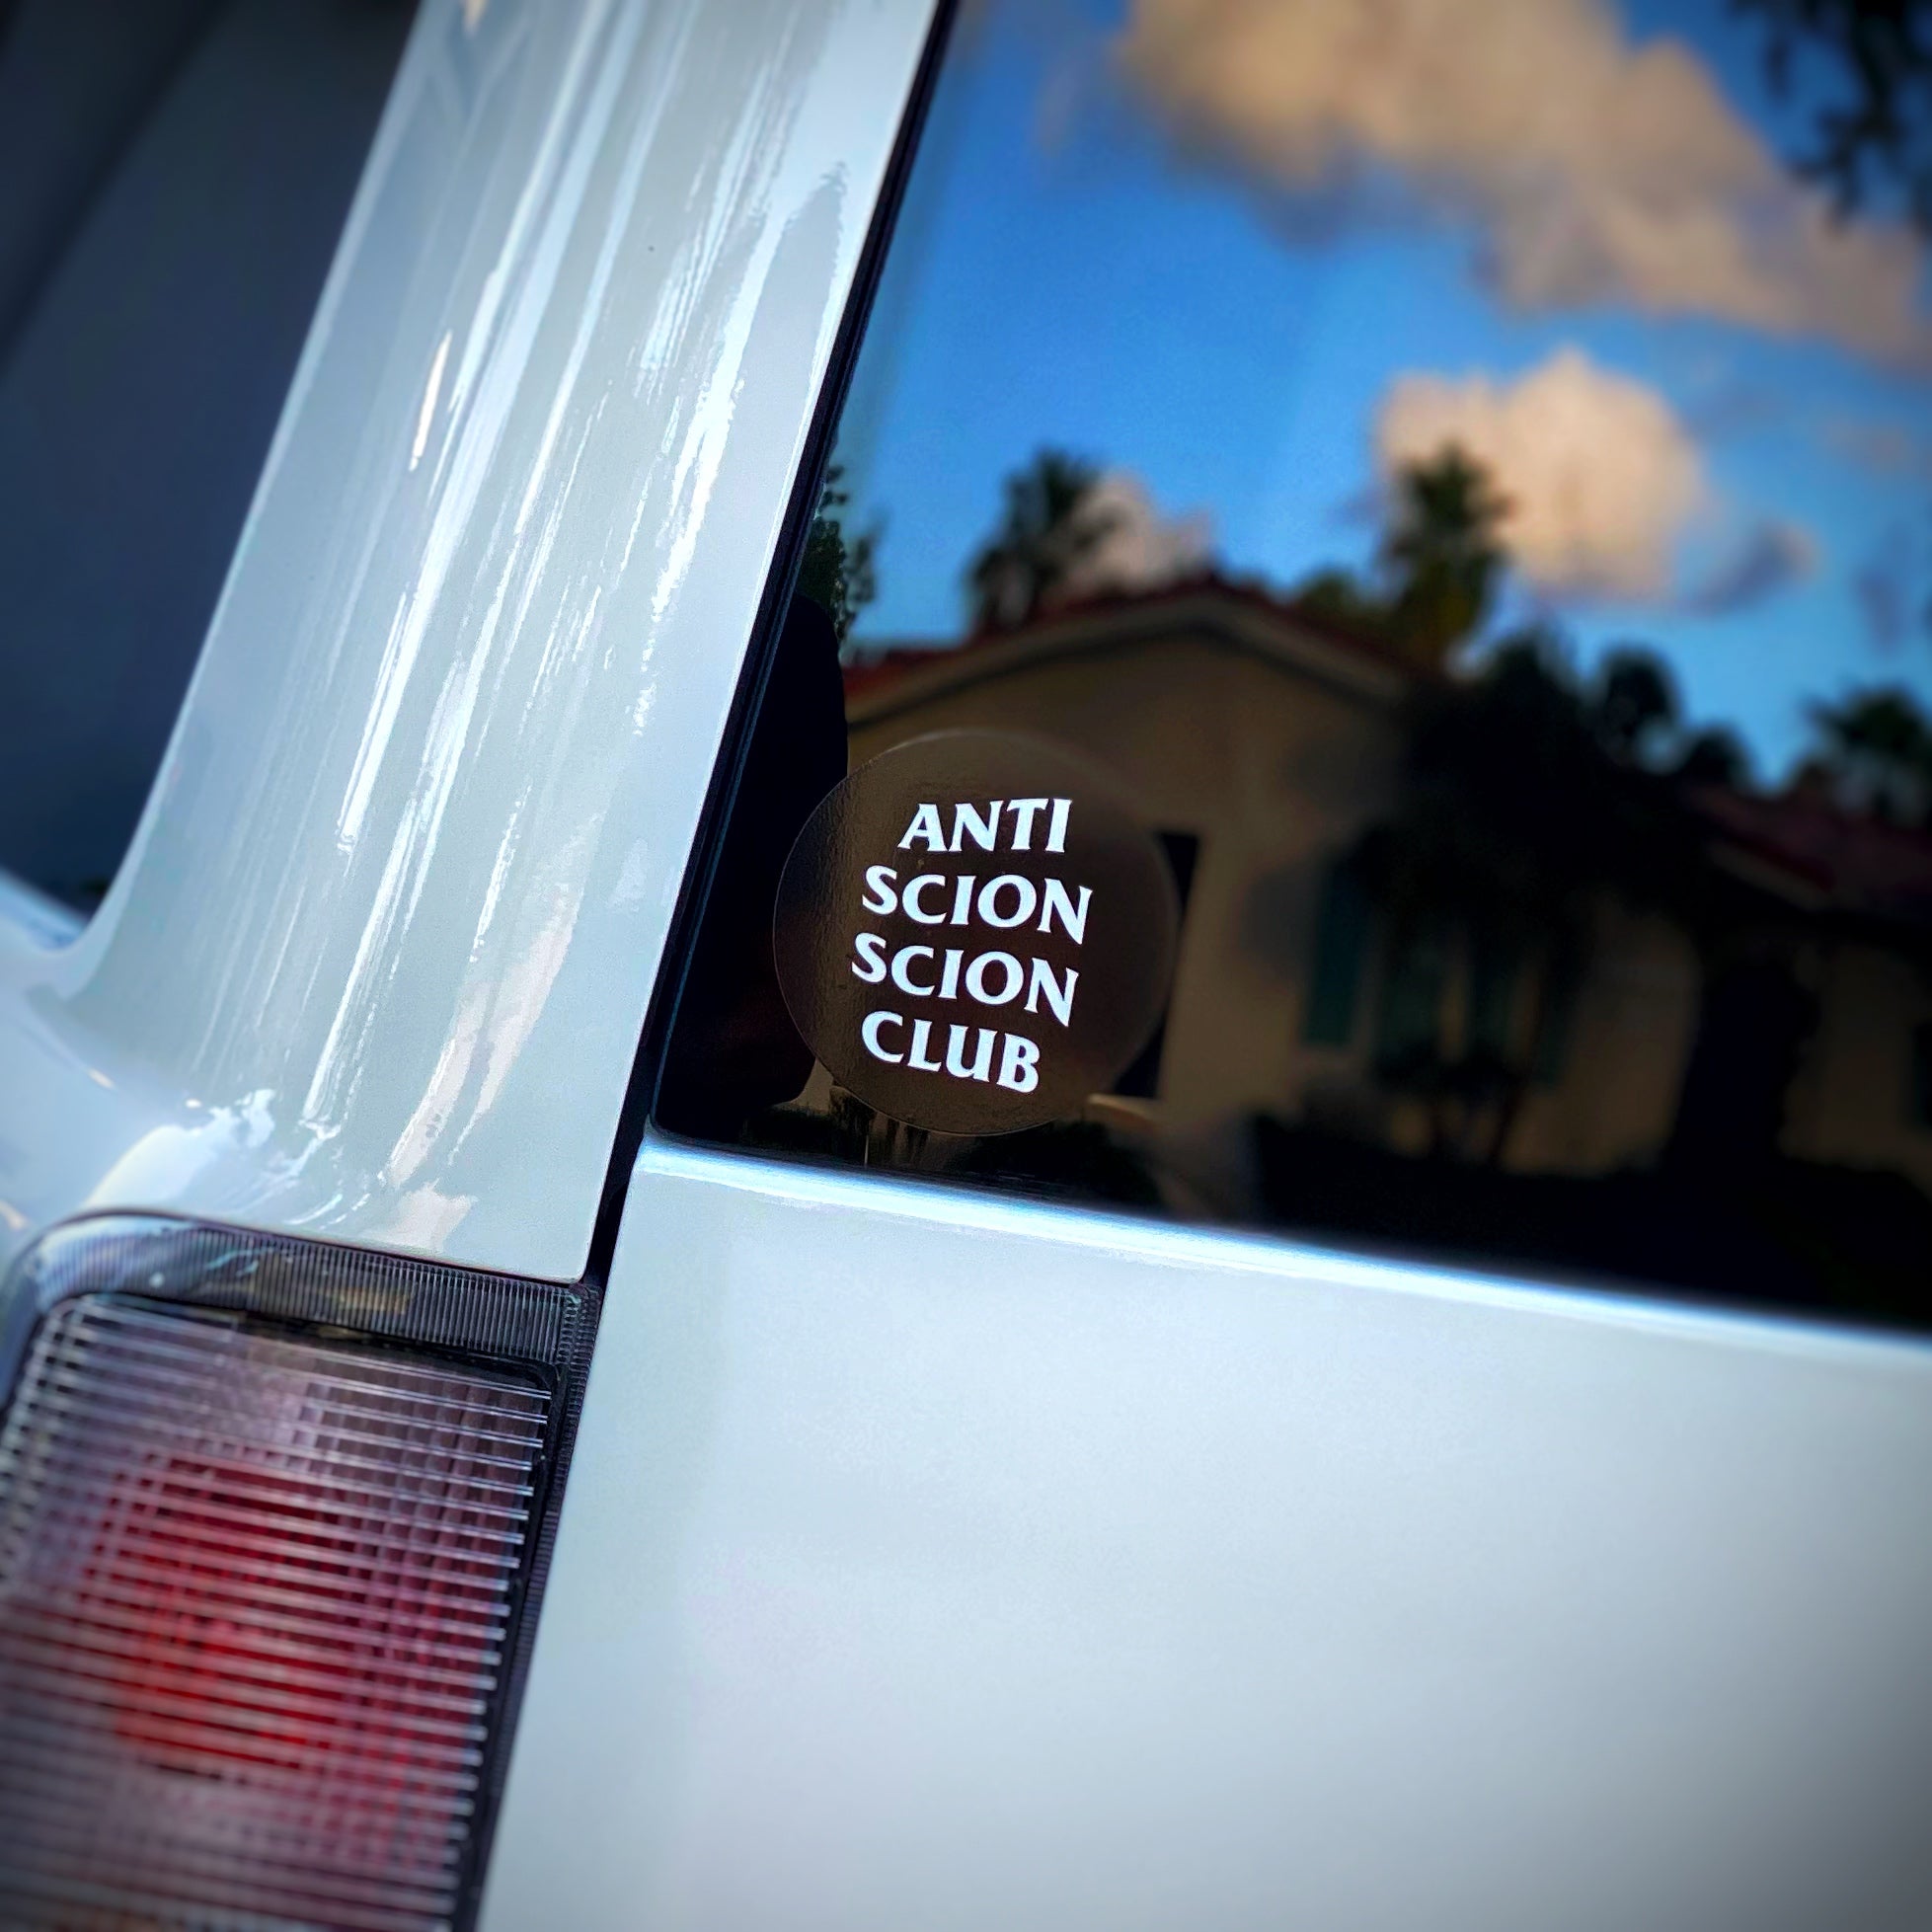 Dangerous Goods®️ “Anti Scion Scion Club” Sticker